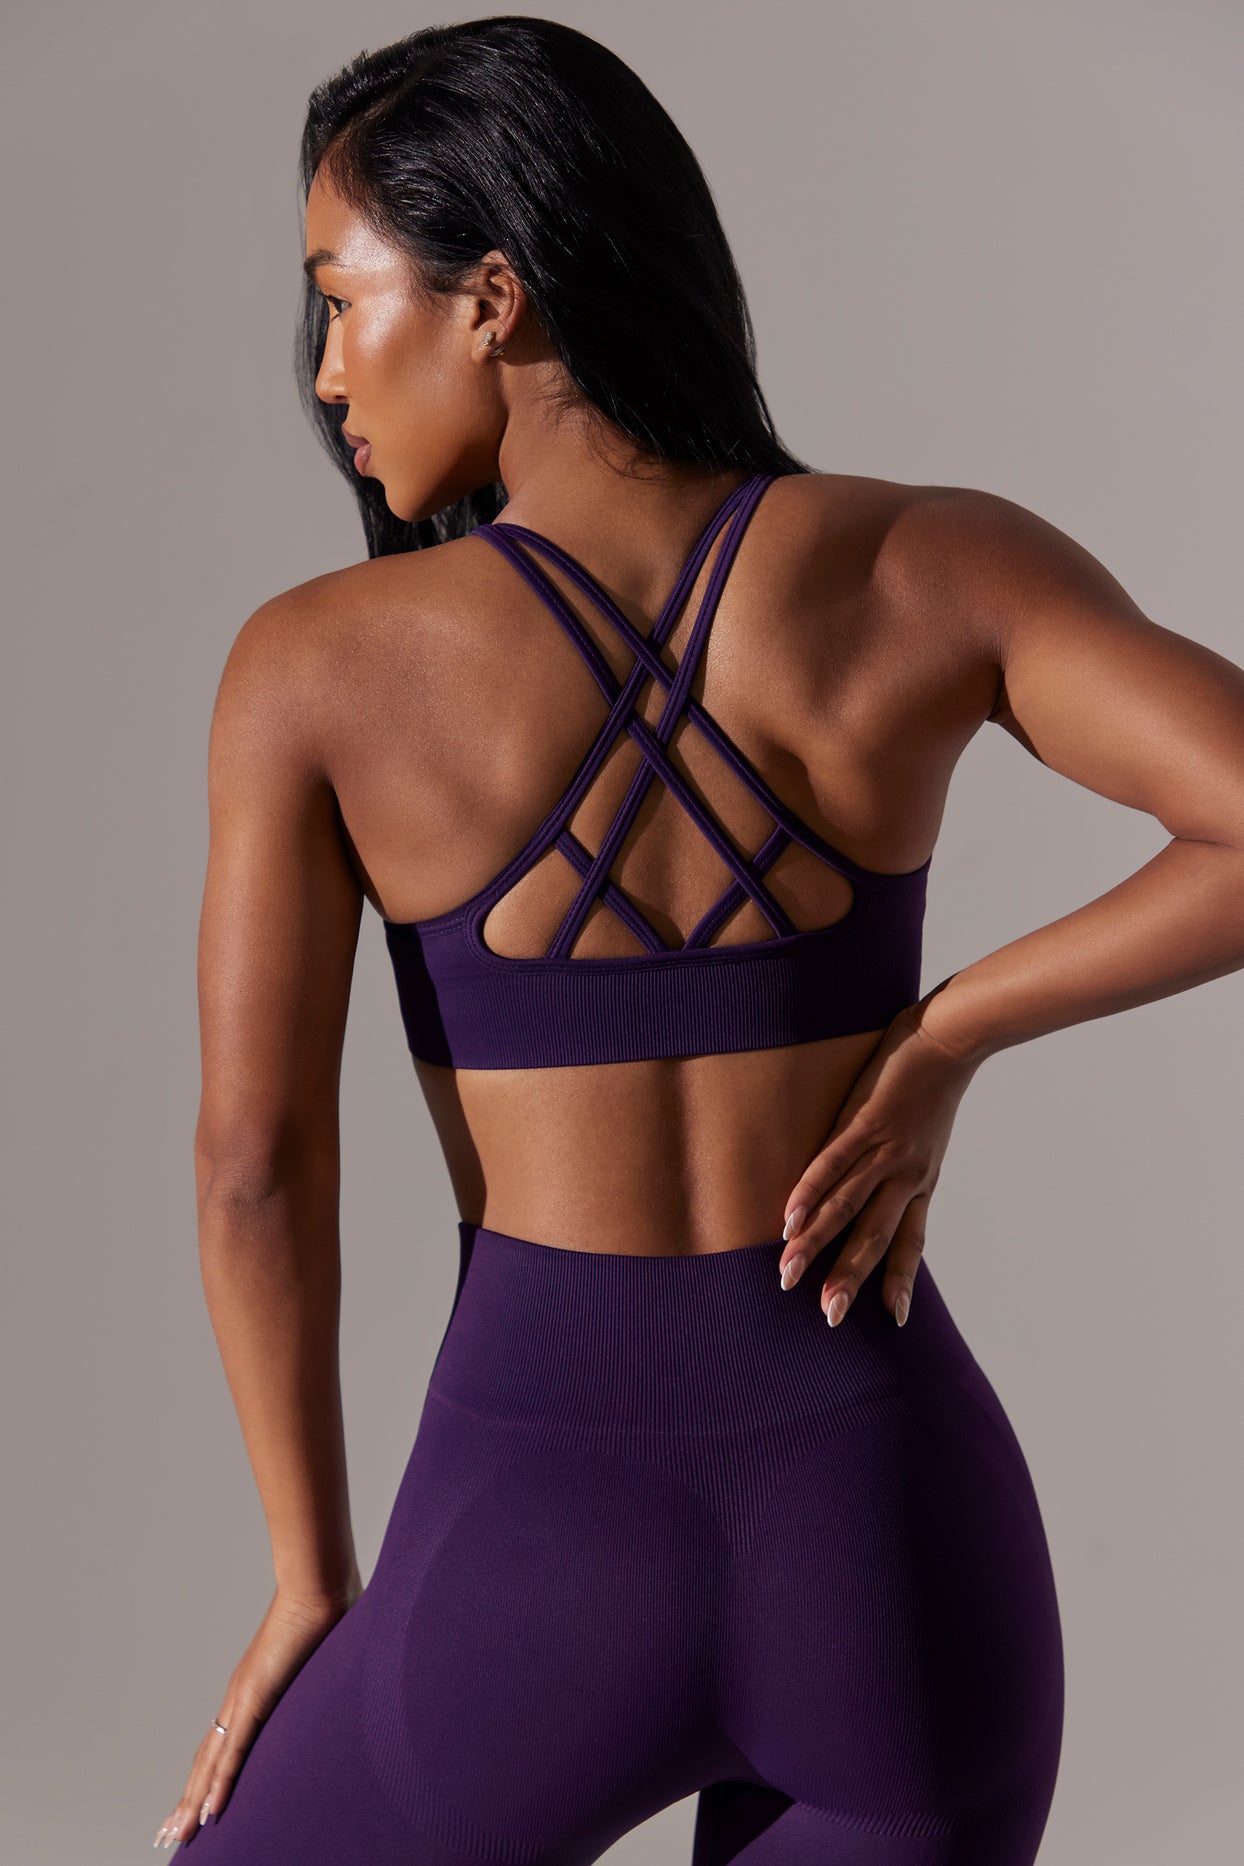 RQYYD Women's Longline Scoop Neck Strappy Sports Bras Back Closure Criss  Cross Adjustable Padded Yoga Bra Workout Tops Purple XL